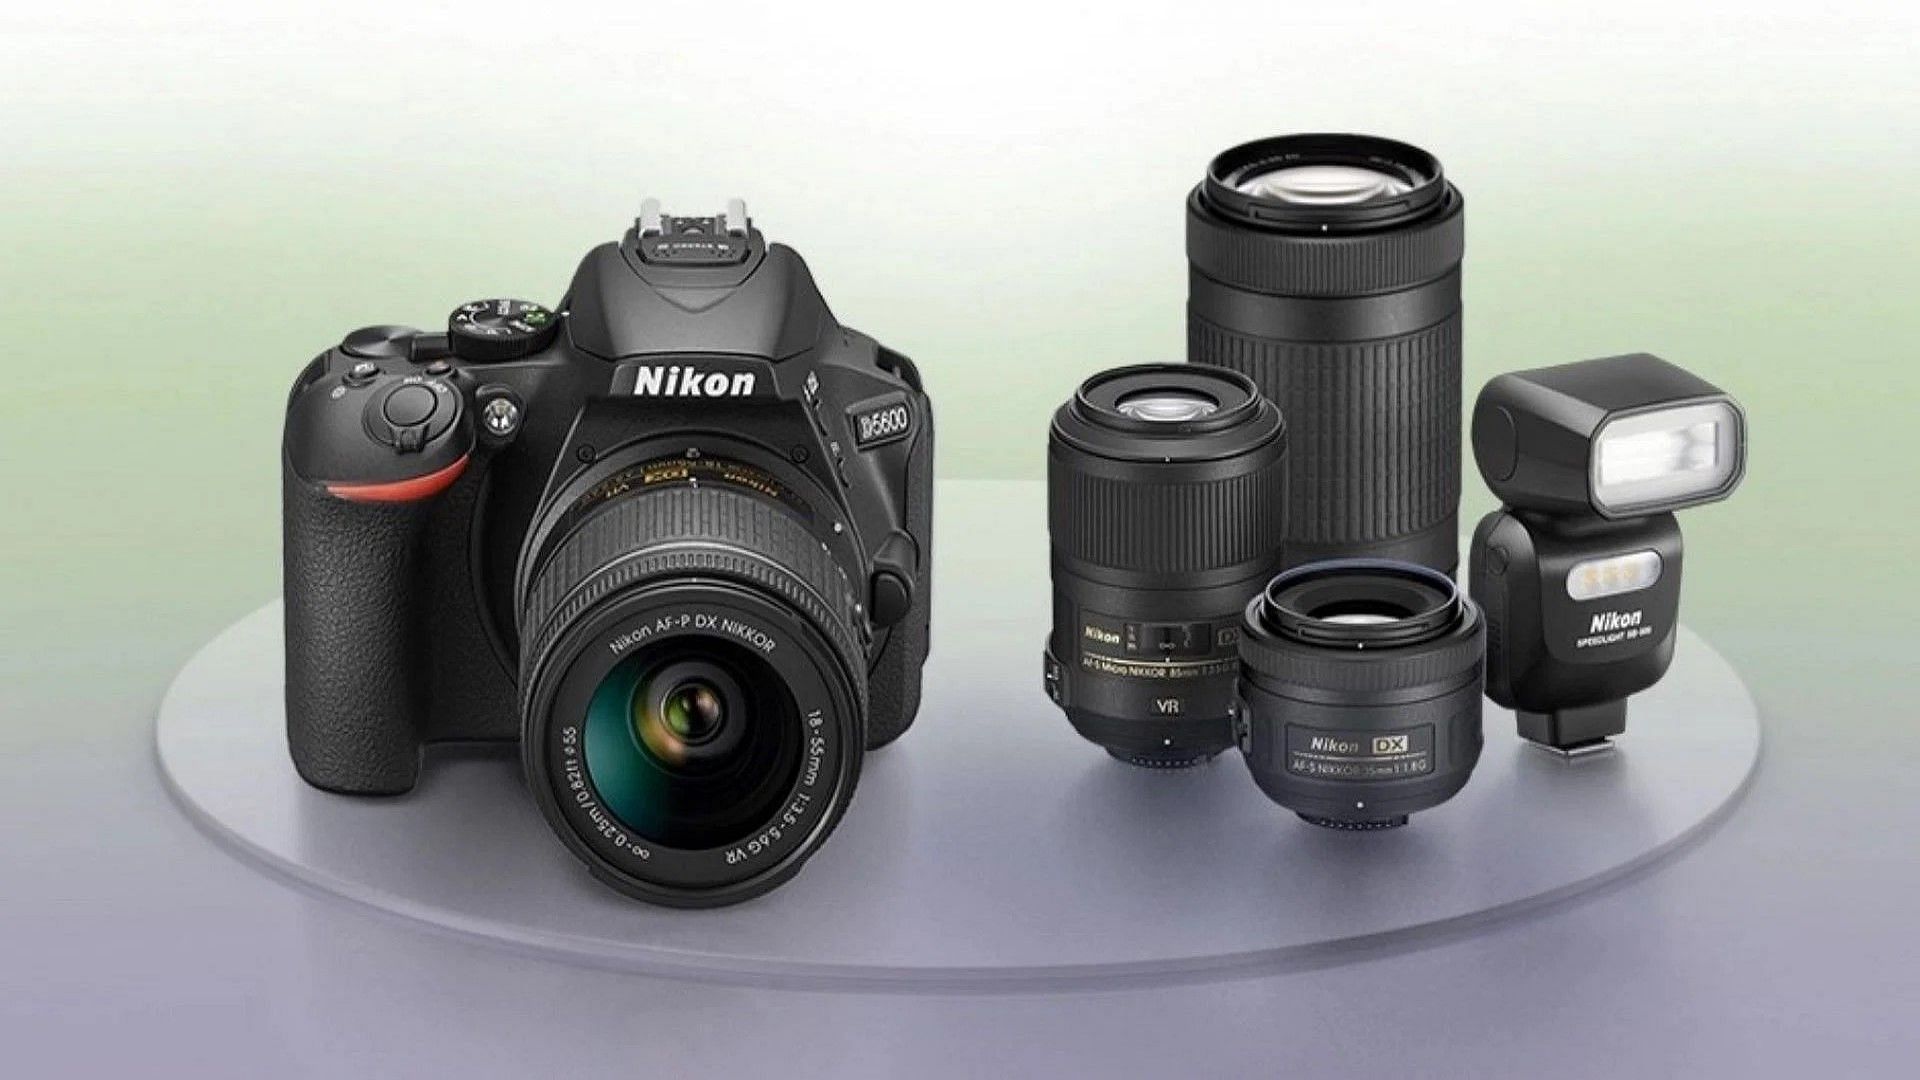 The Nikon D5600 (Image via Nikon USA)